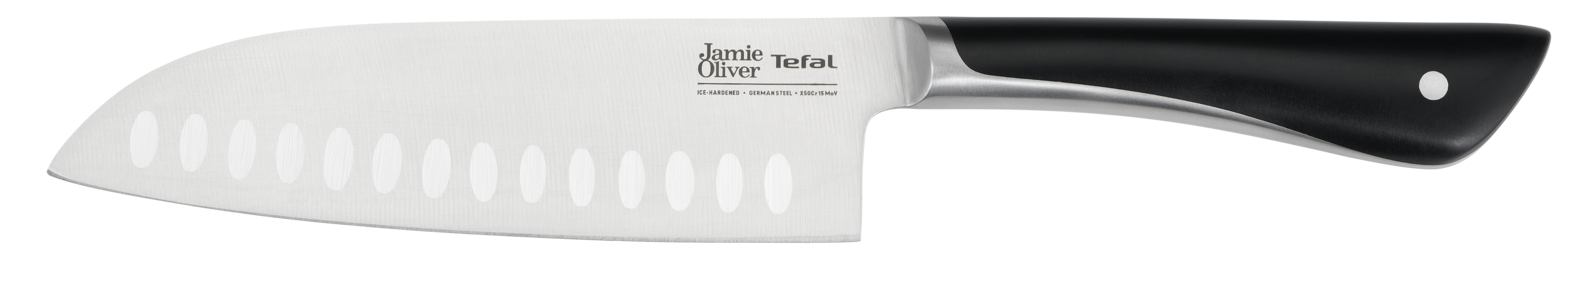 Нож сантоку Jamie Oliver K2671556 16.5 см нож кухонный tefal jamie oliver поварской нержавеющая сталь 20 см рукоятка пластик k2670144